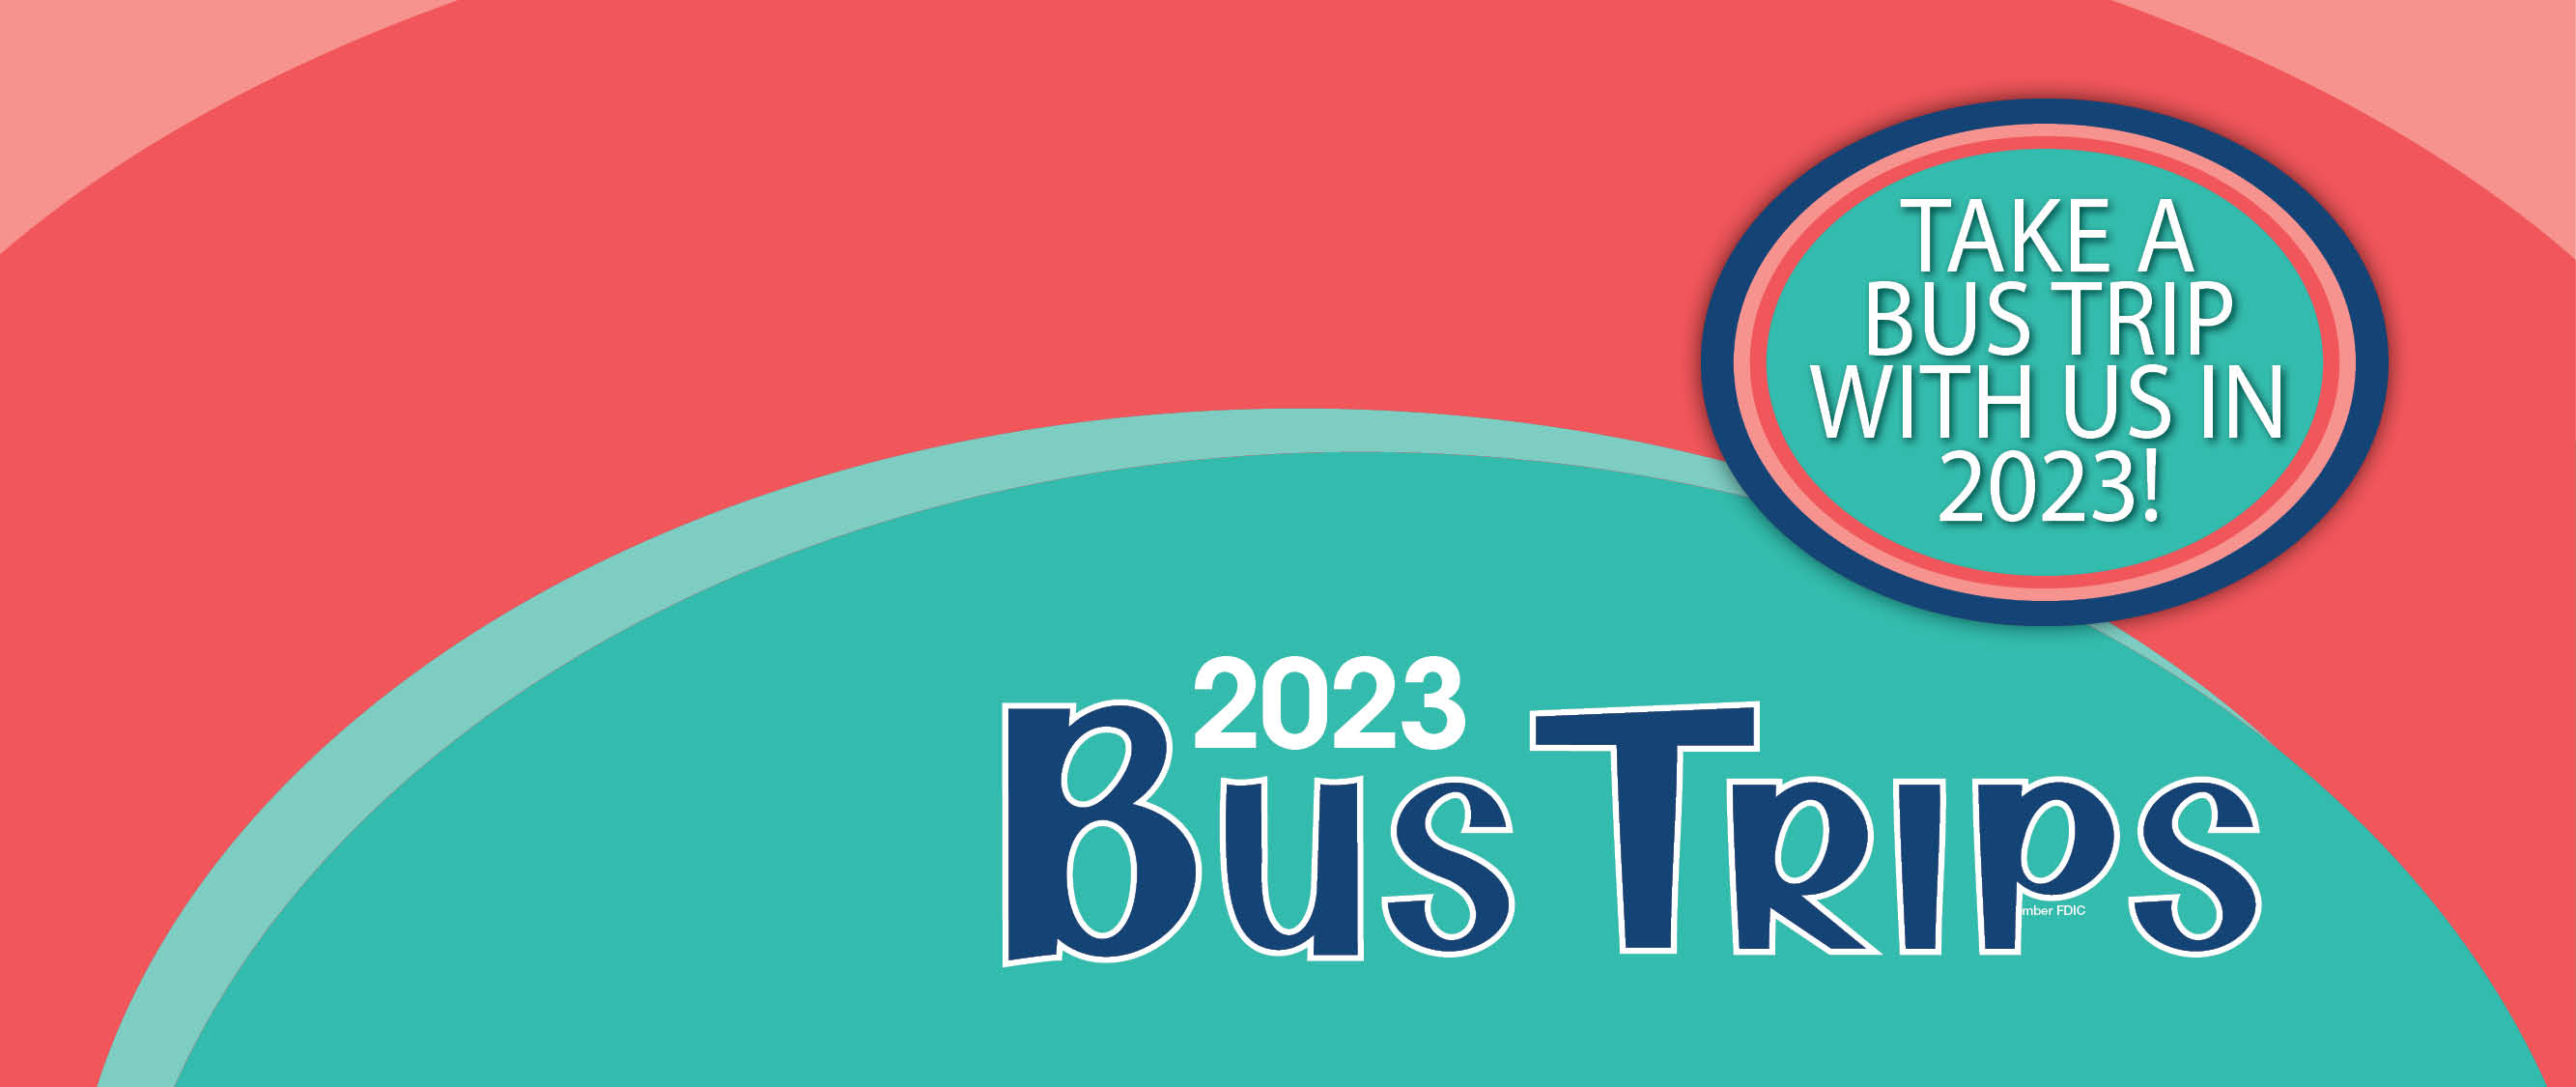 slide - bus trips 2023